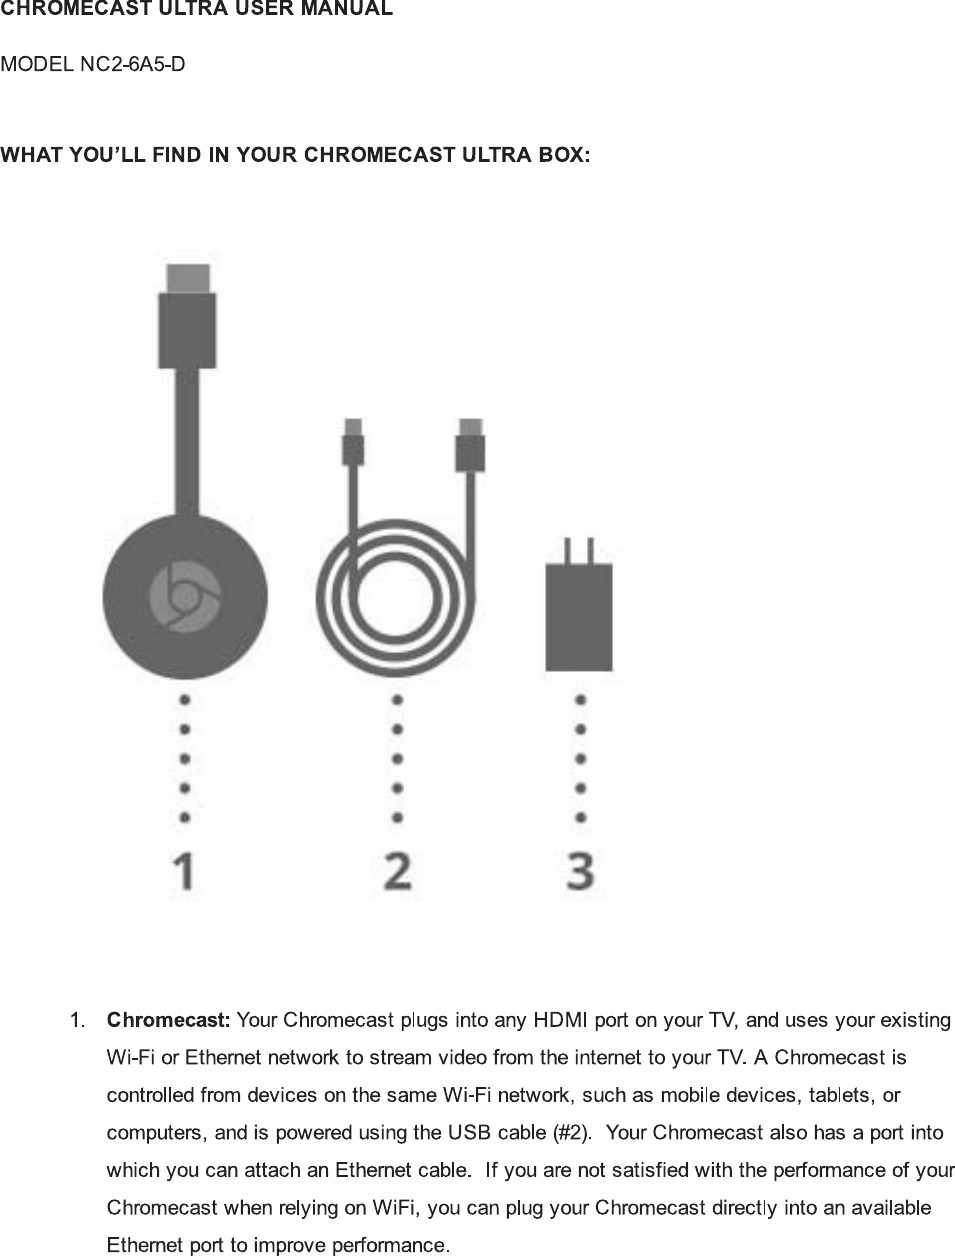 Chromecast User Manual Download